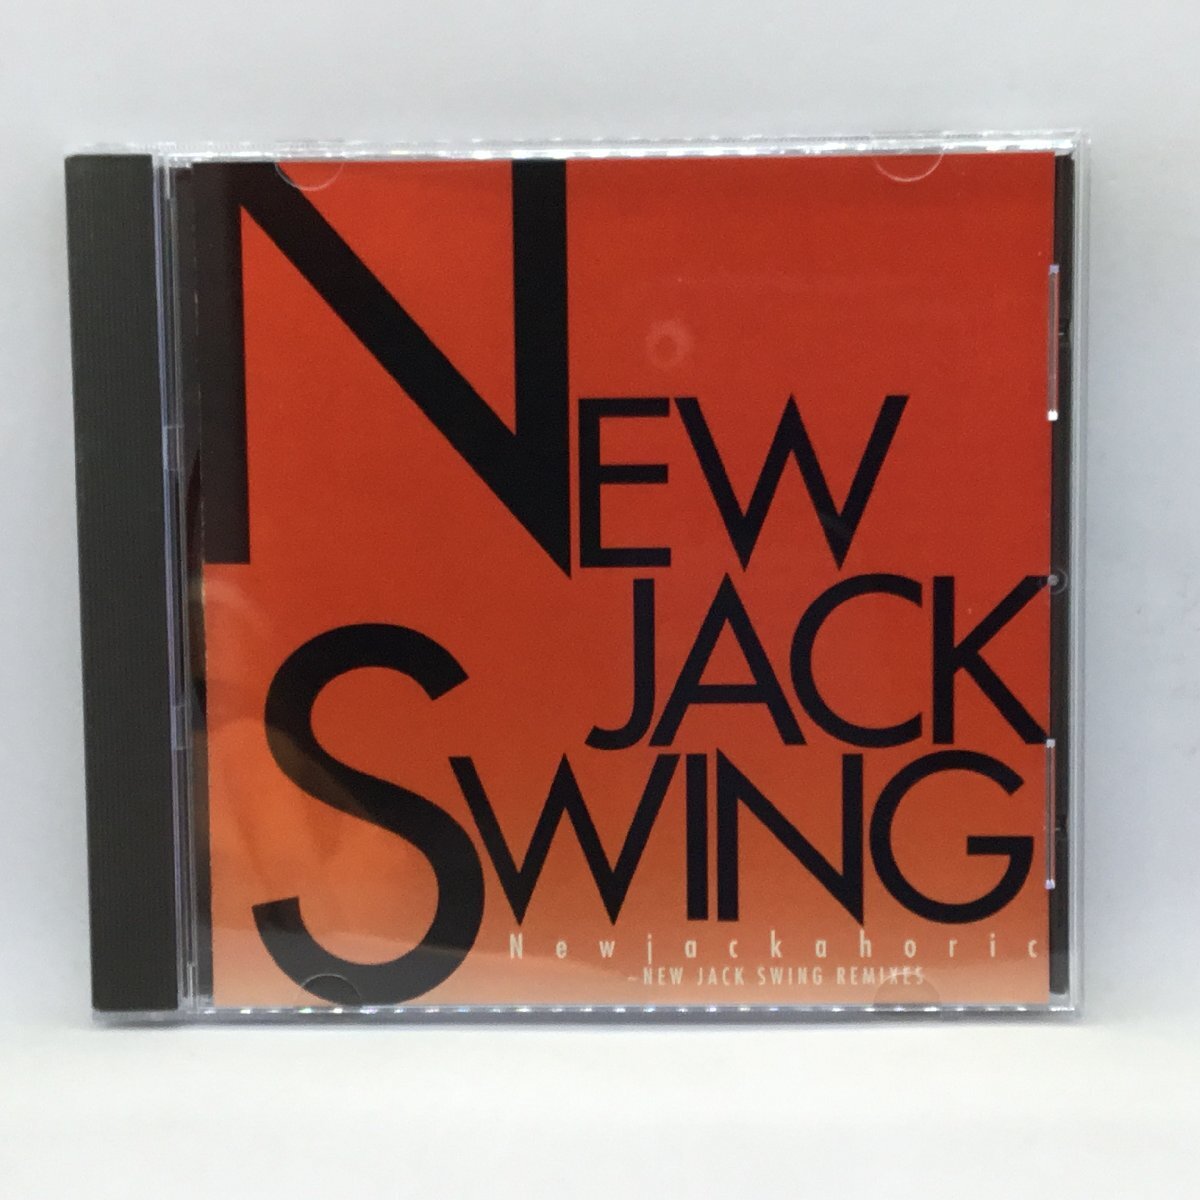 Newjackahoric~NEW JACK SWING REMIXES (CD) MVCE-14004